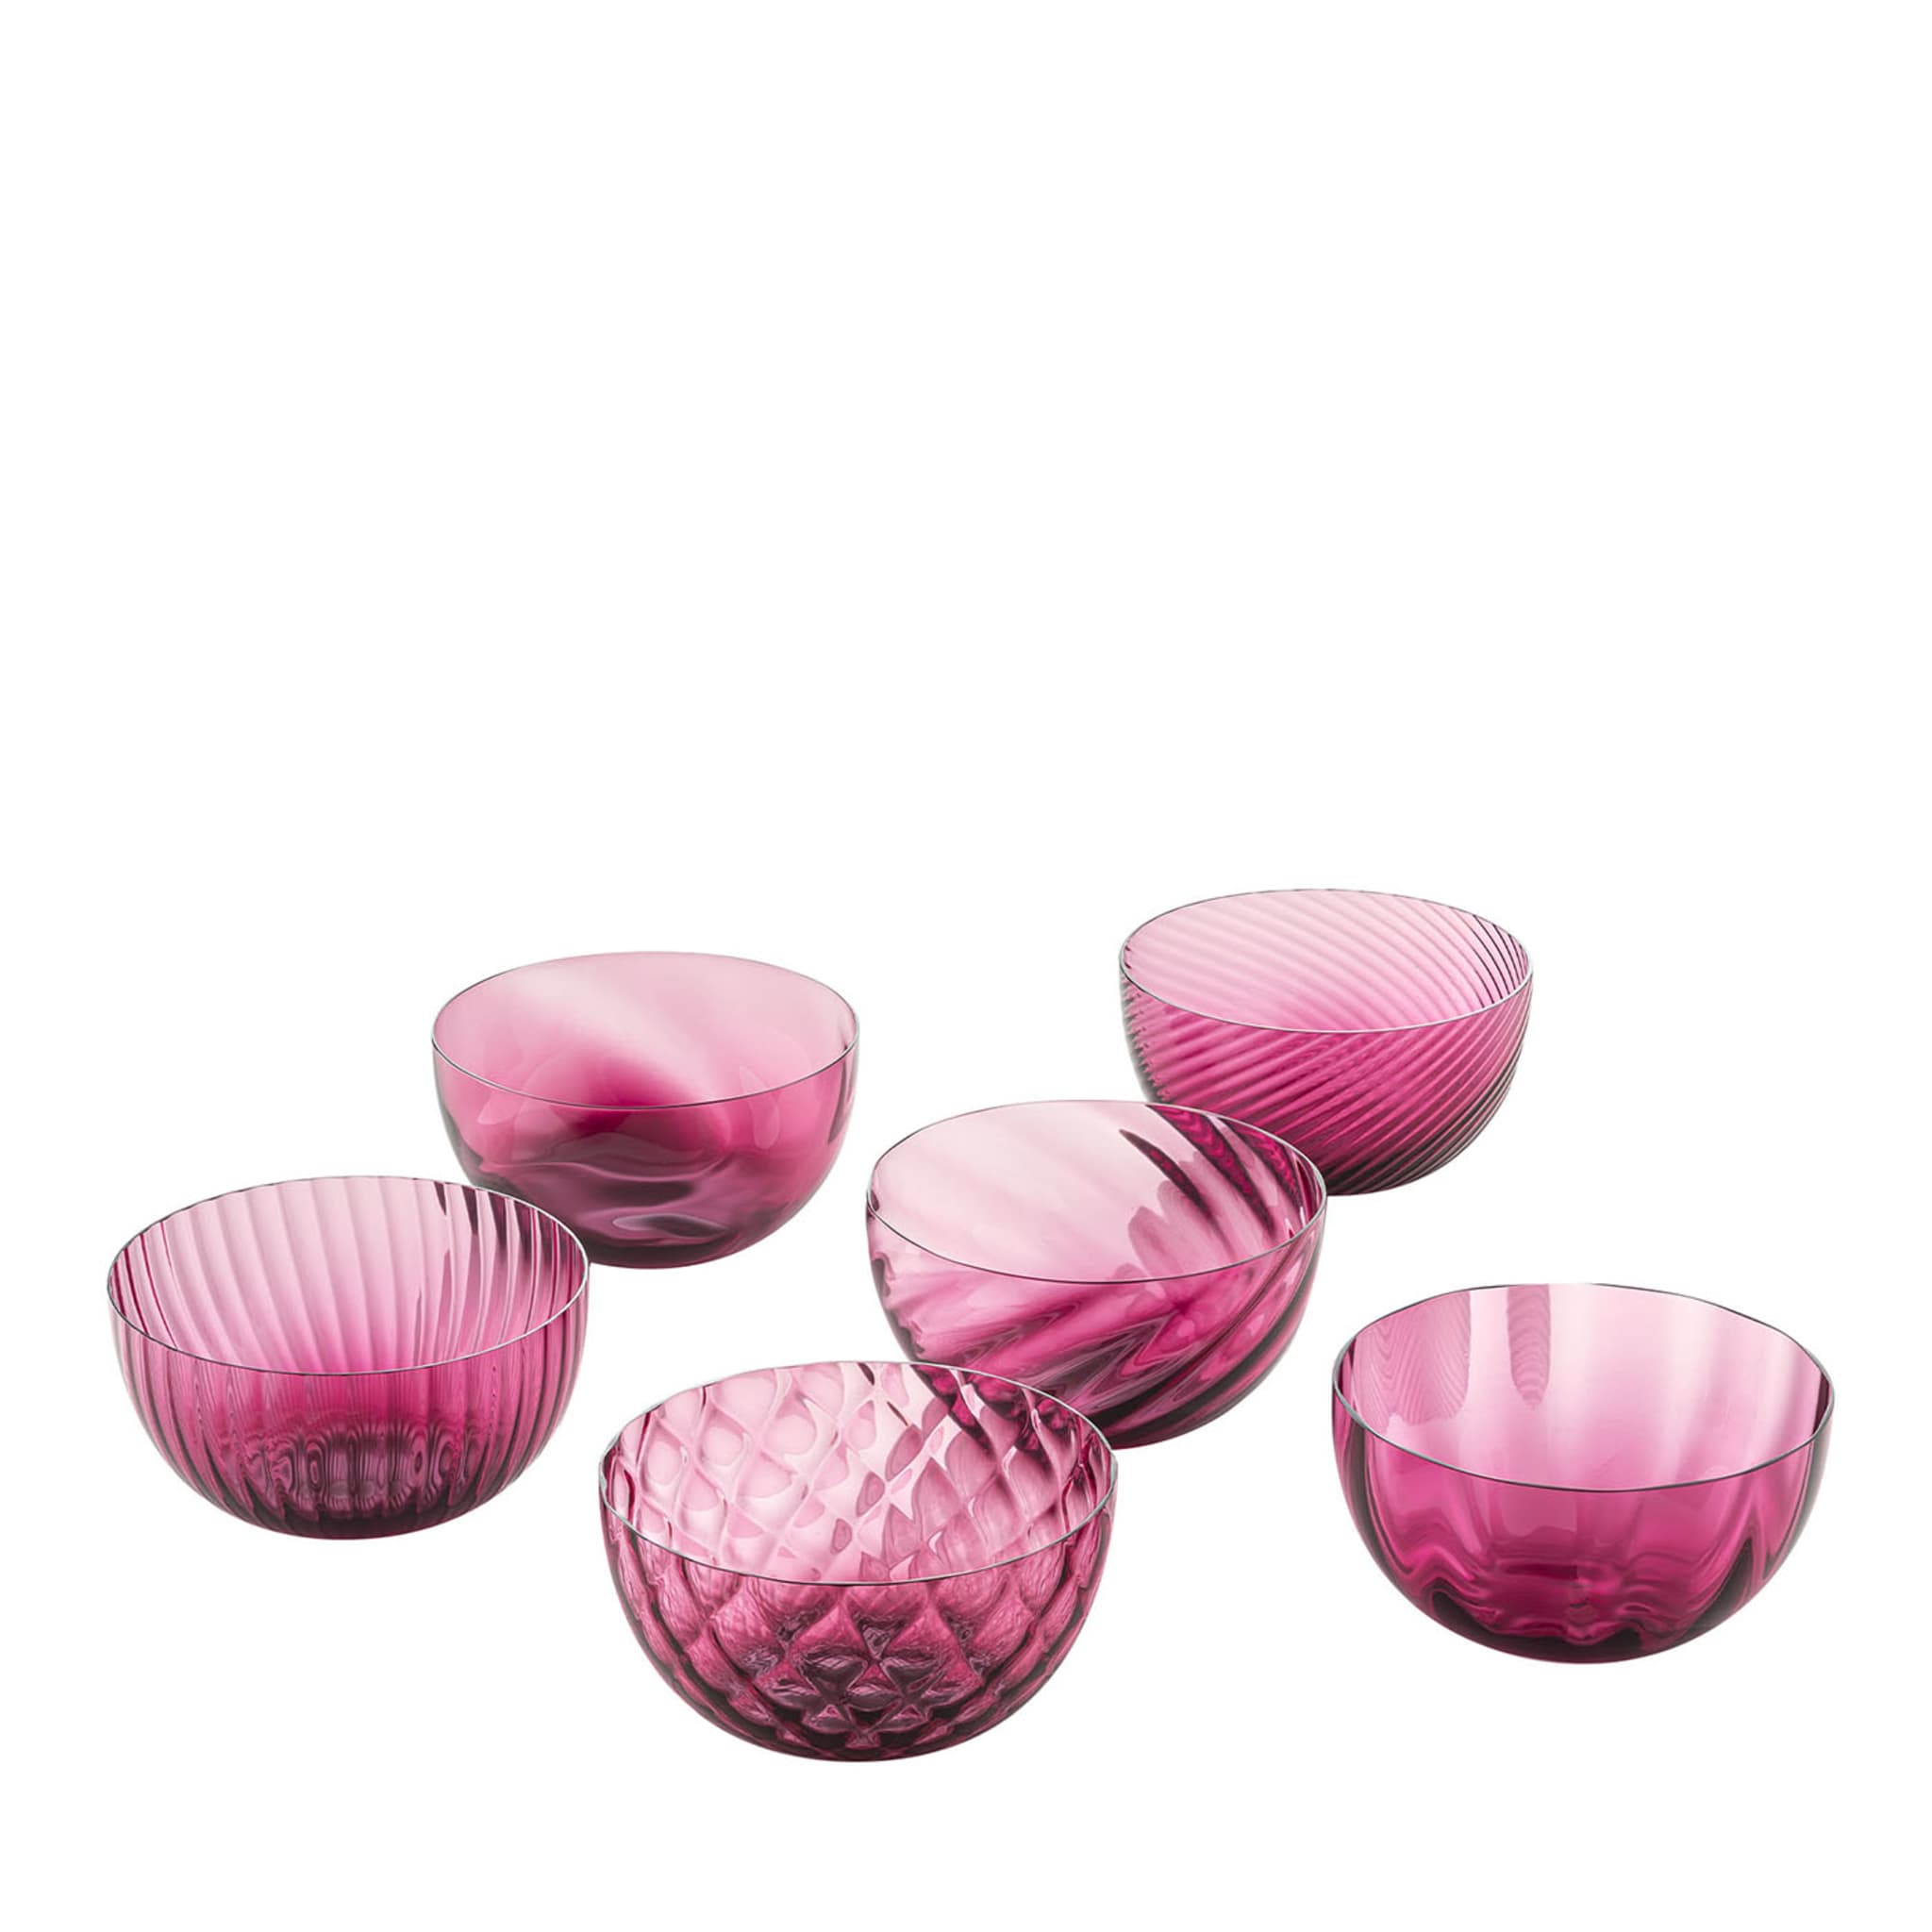 Butterfly bowl - Mateus  Bowl, Swedish design, Decorative items